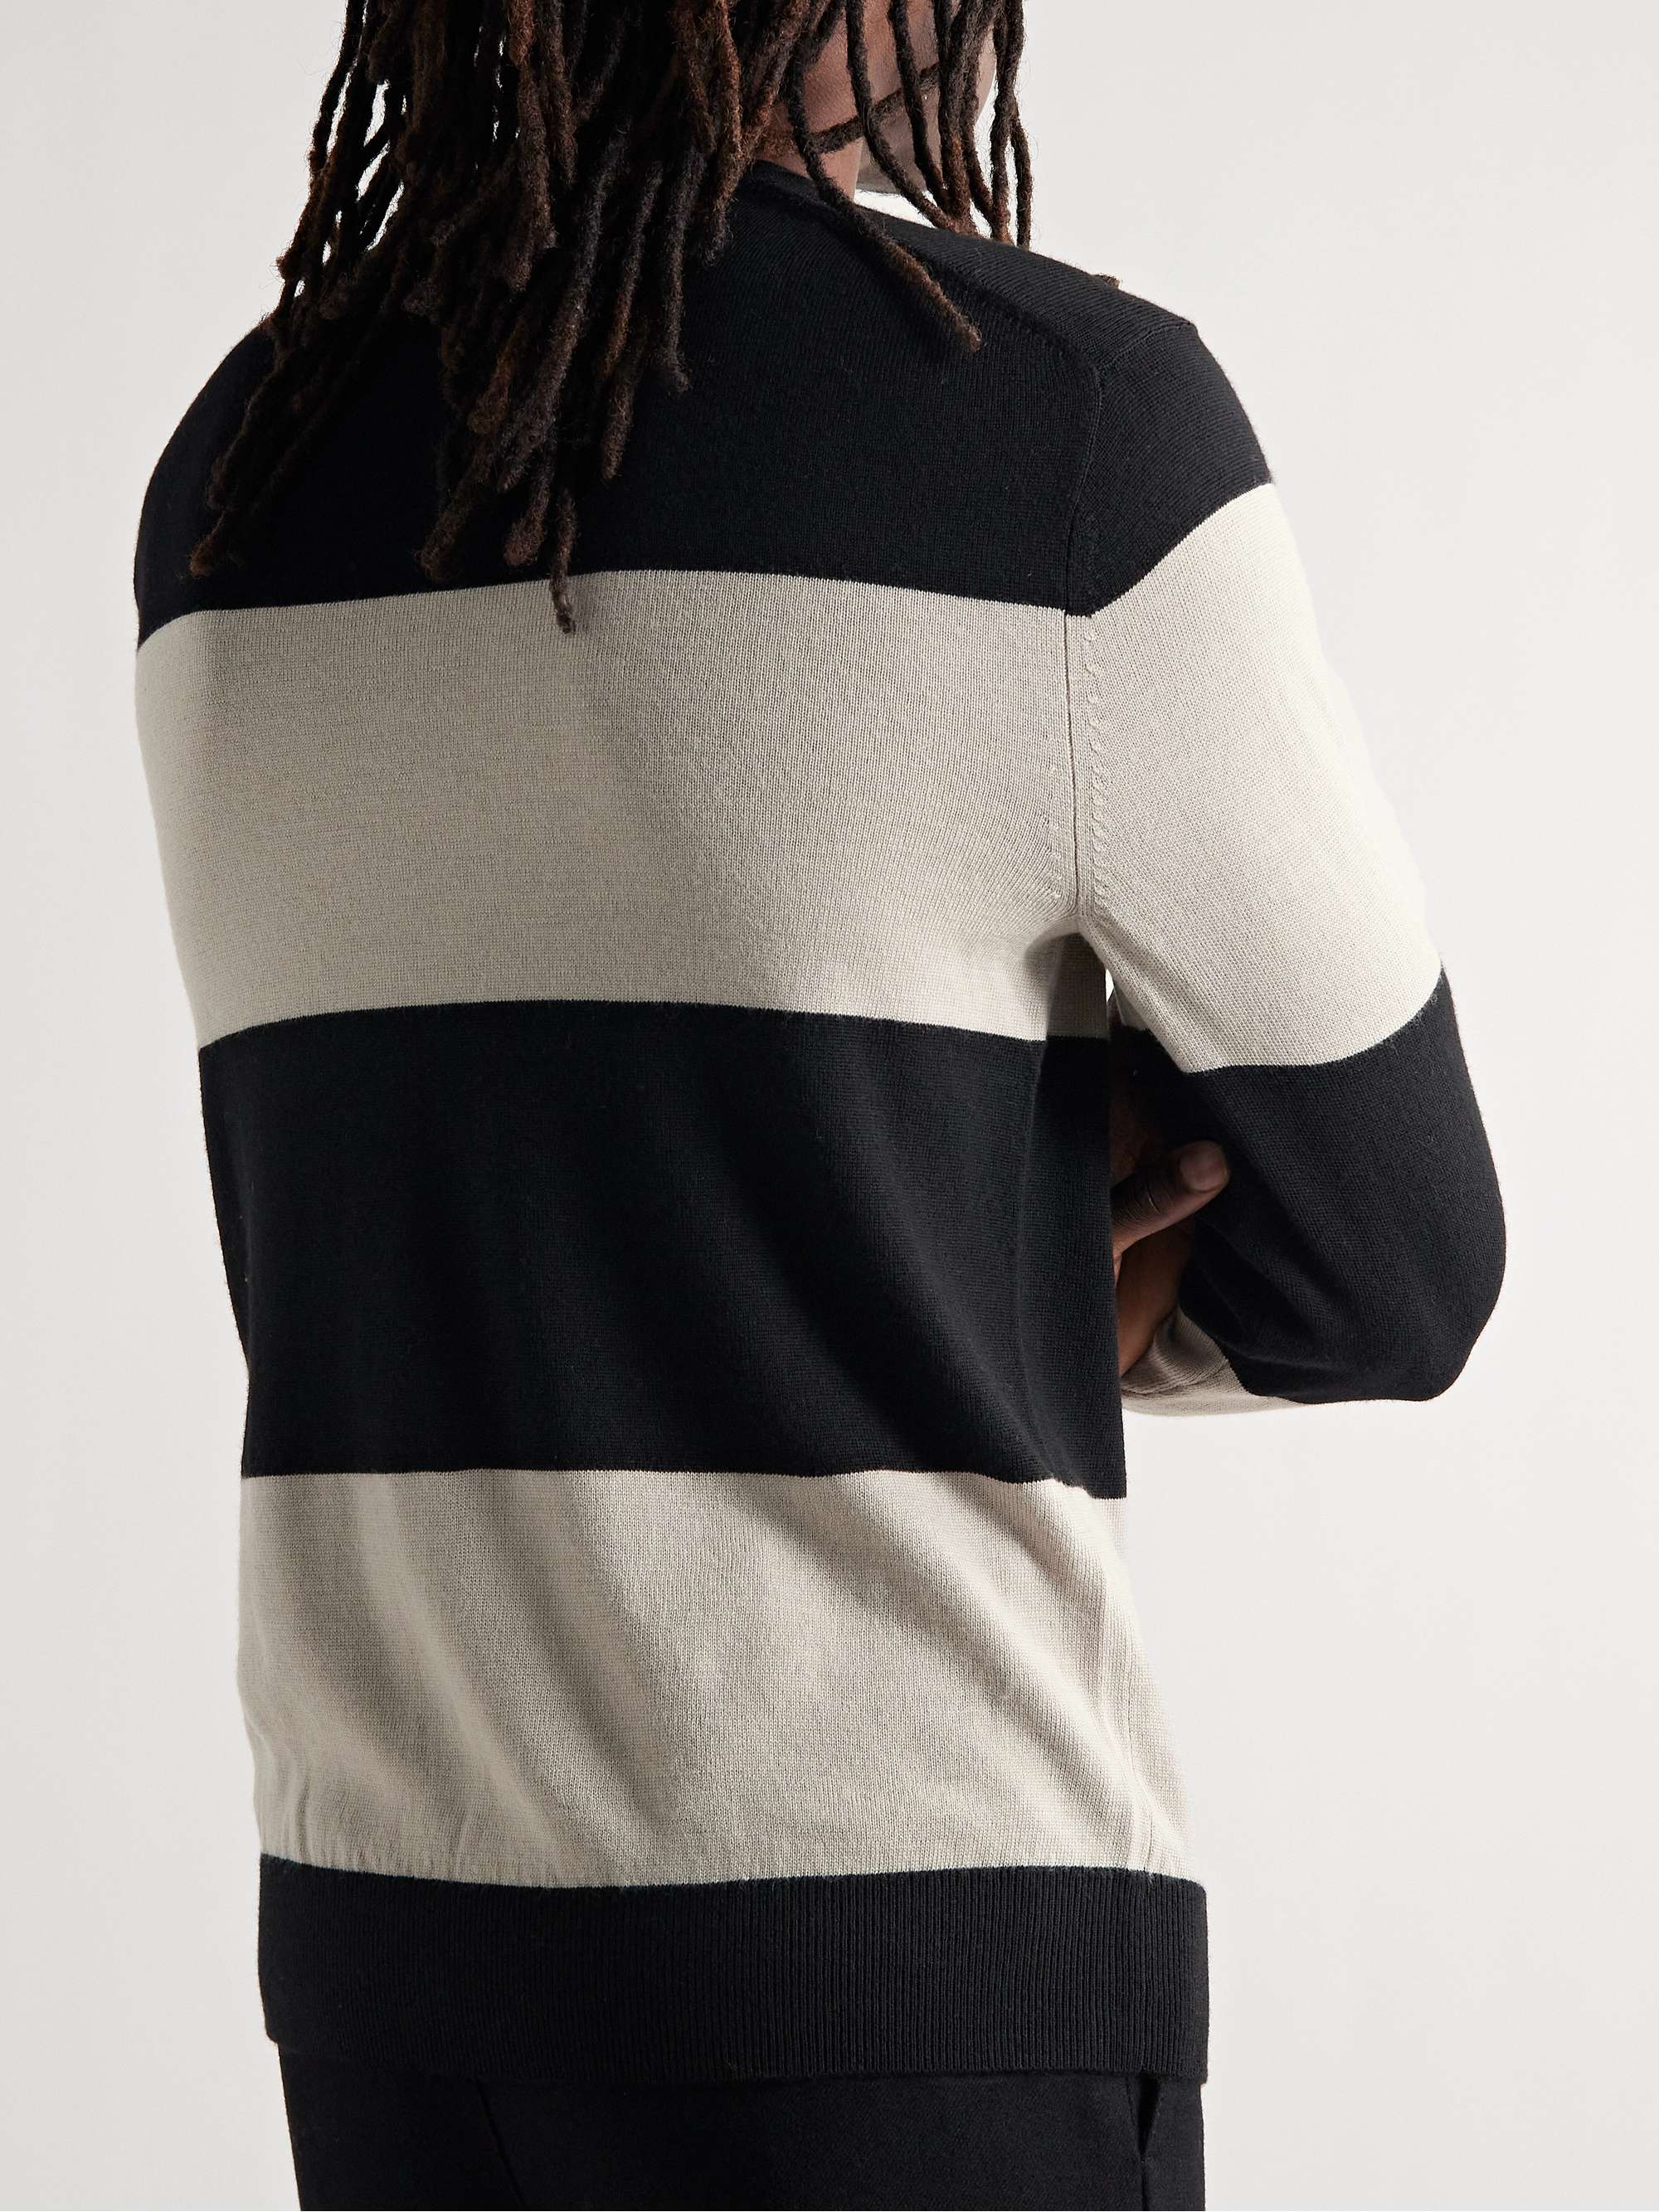 CLUB MONACO Slim-Fit Striped Wool Sweater